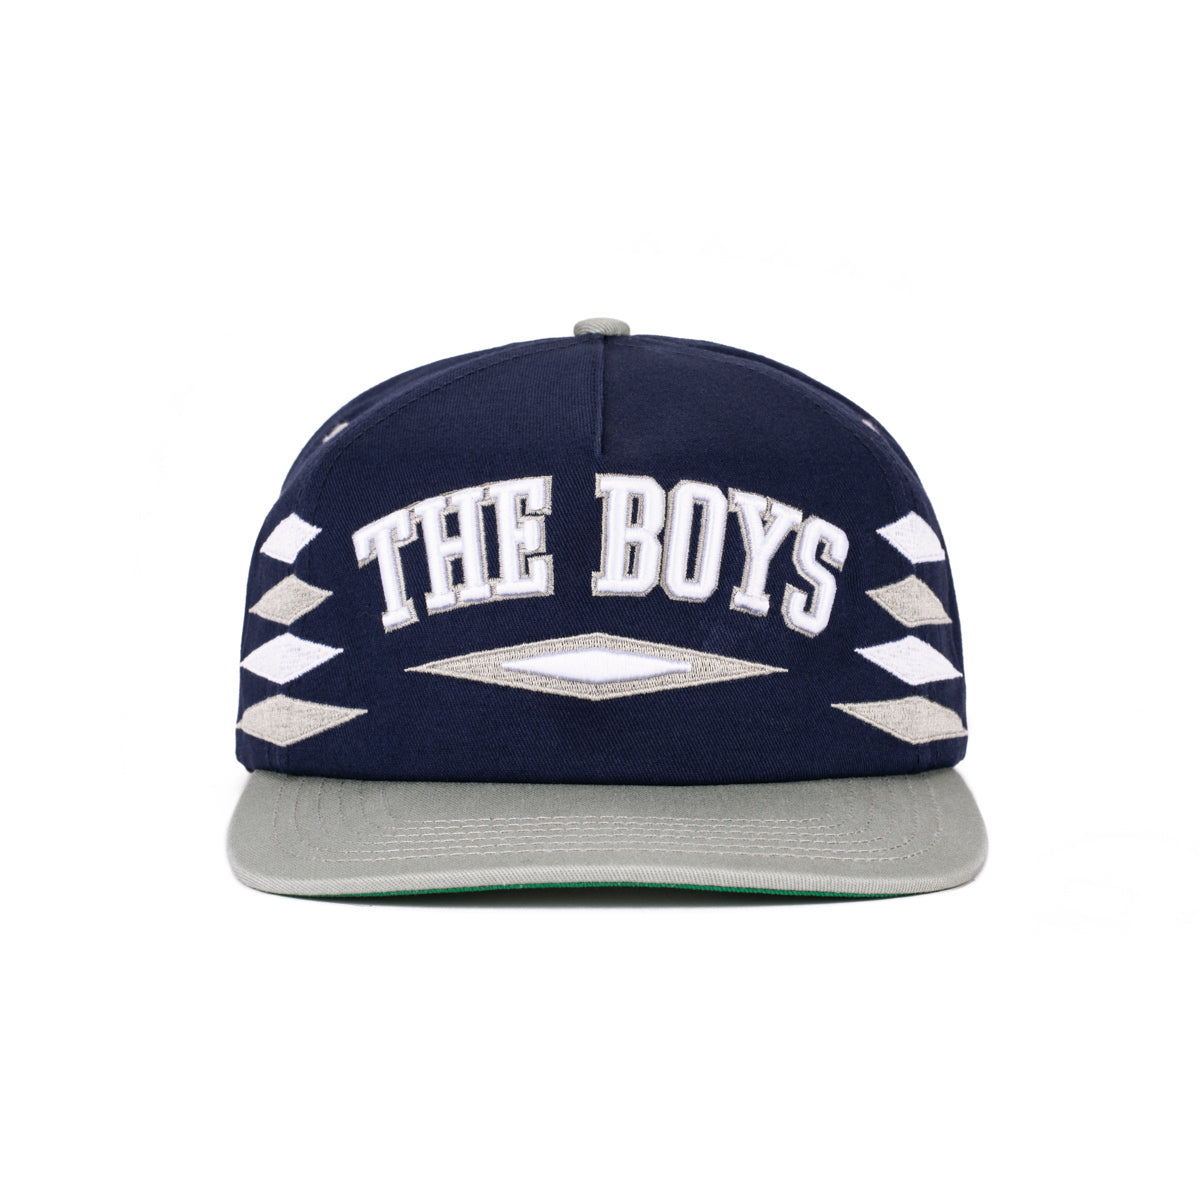 The Boys Diamond Retro Hat-Hats-Bussin With The Boys-Navy/Grey-OS-Barstool Sports